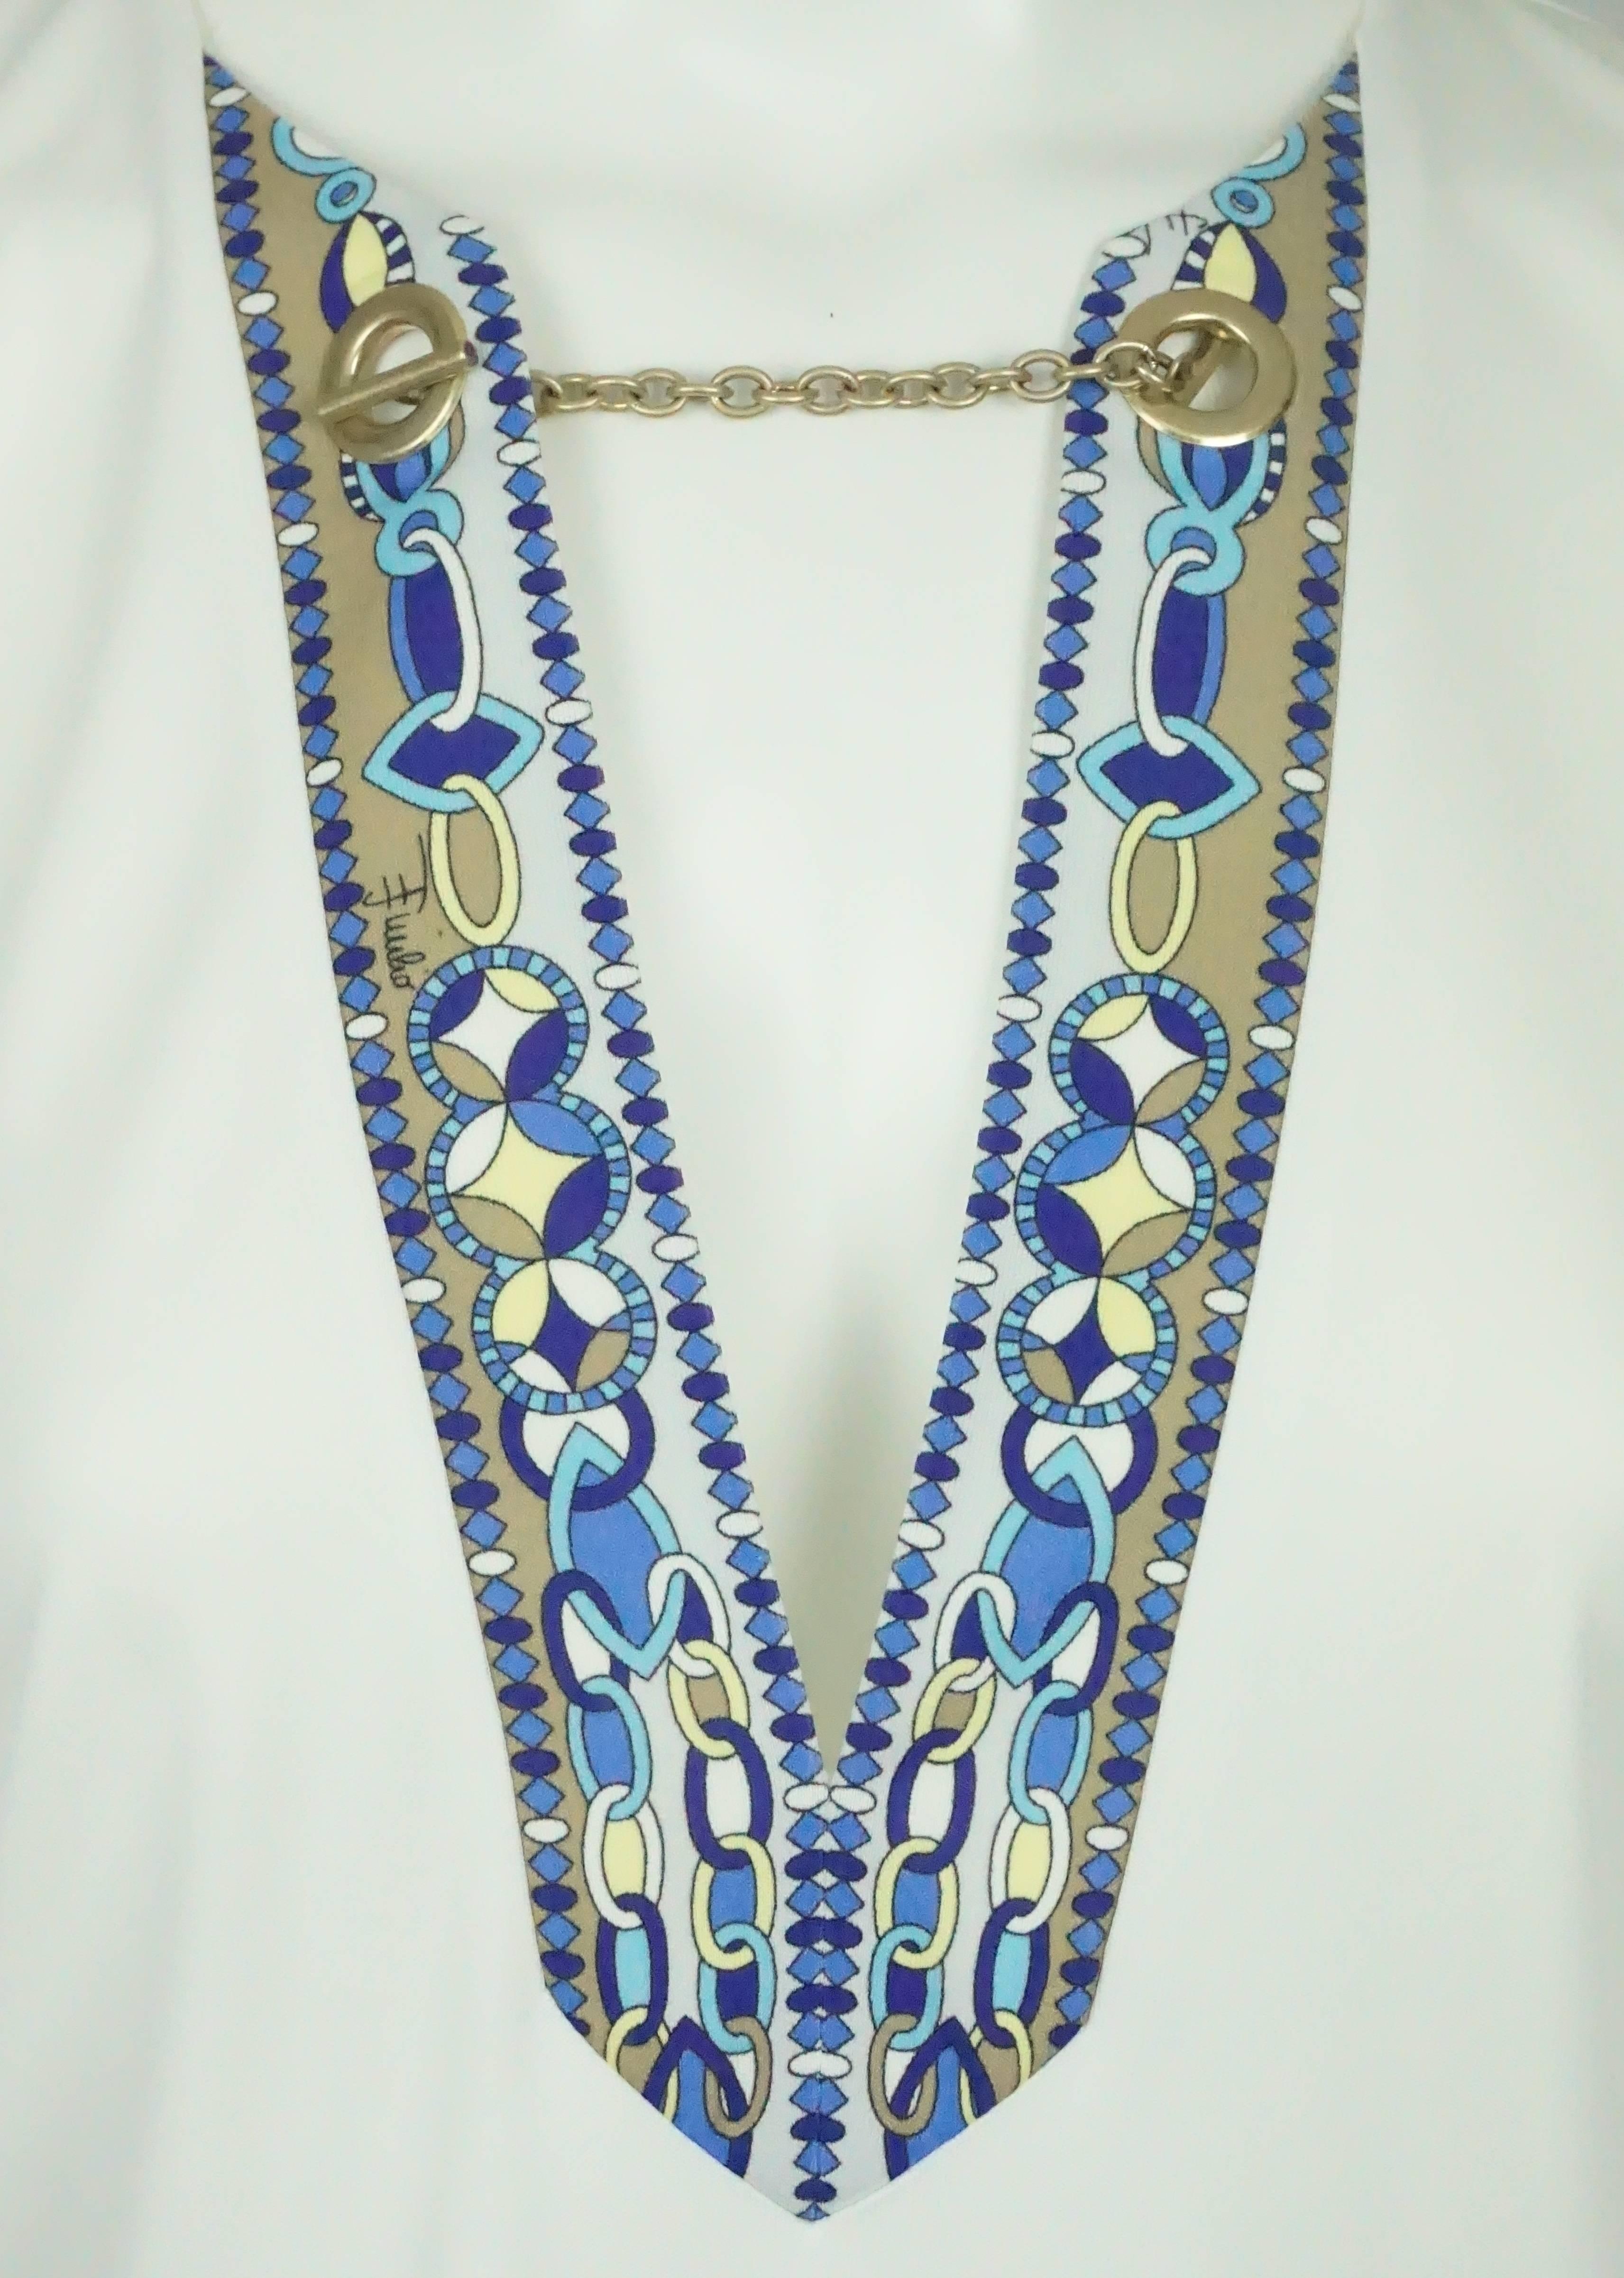 White Emilio Pucci Ivory Silk L/S Top w/ Blue Print and Chain Detail - 40